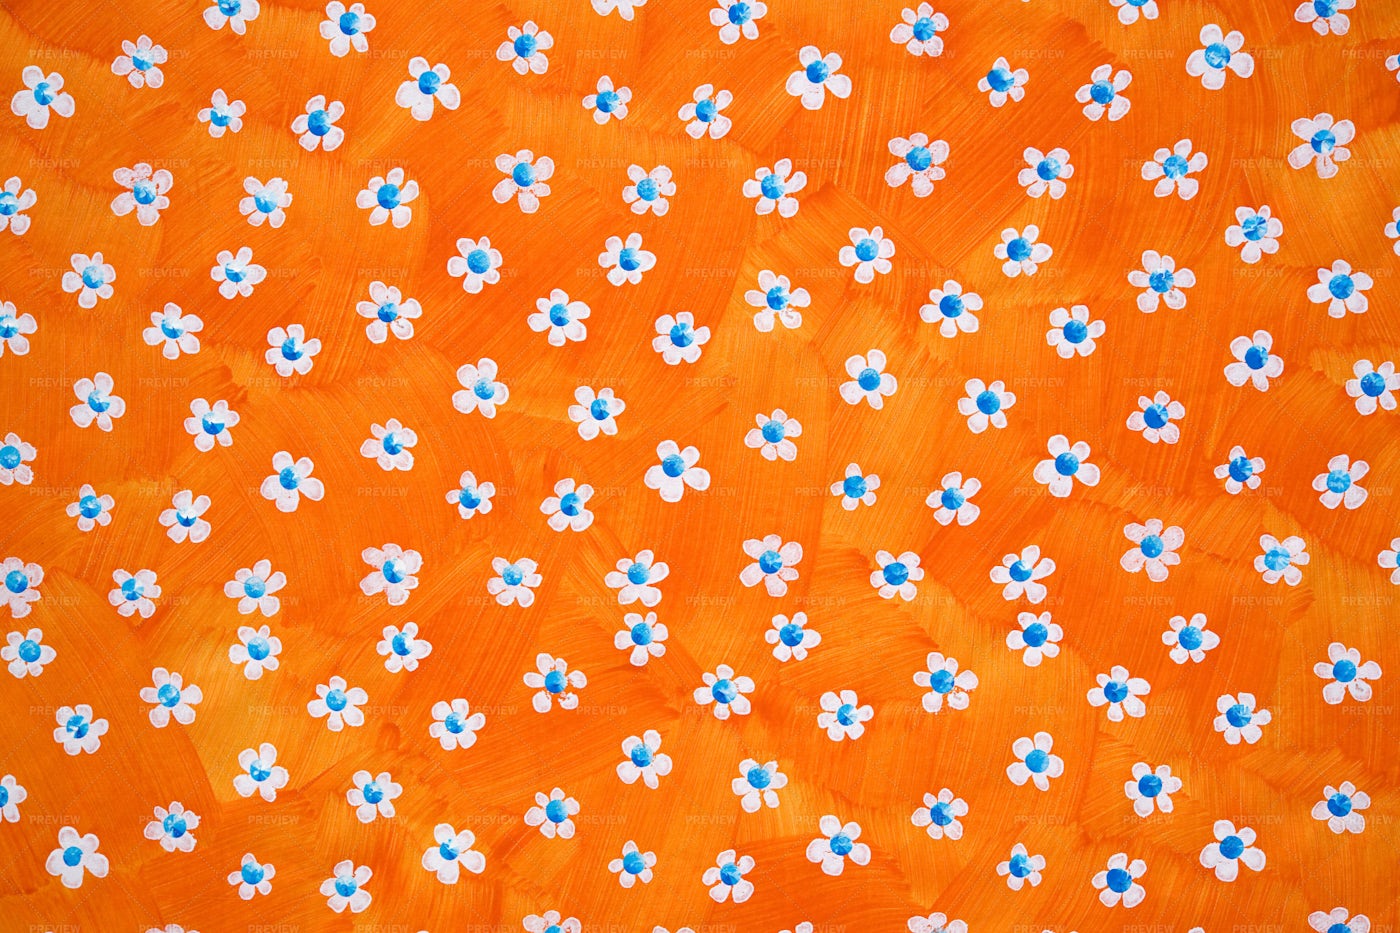 Orange Background With Daisies: Stock Photos